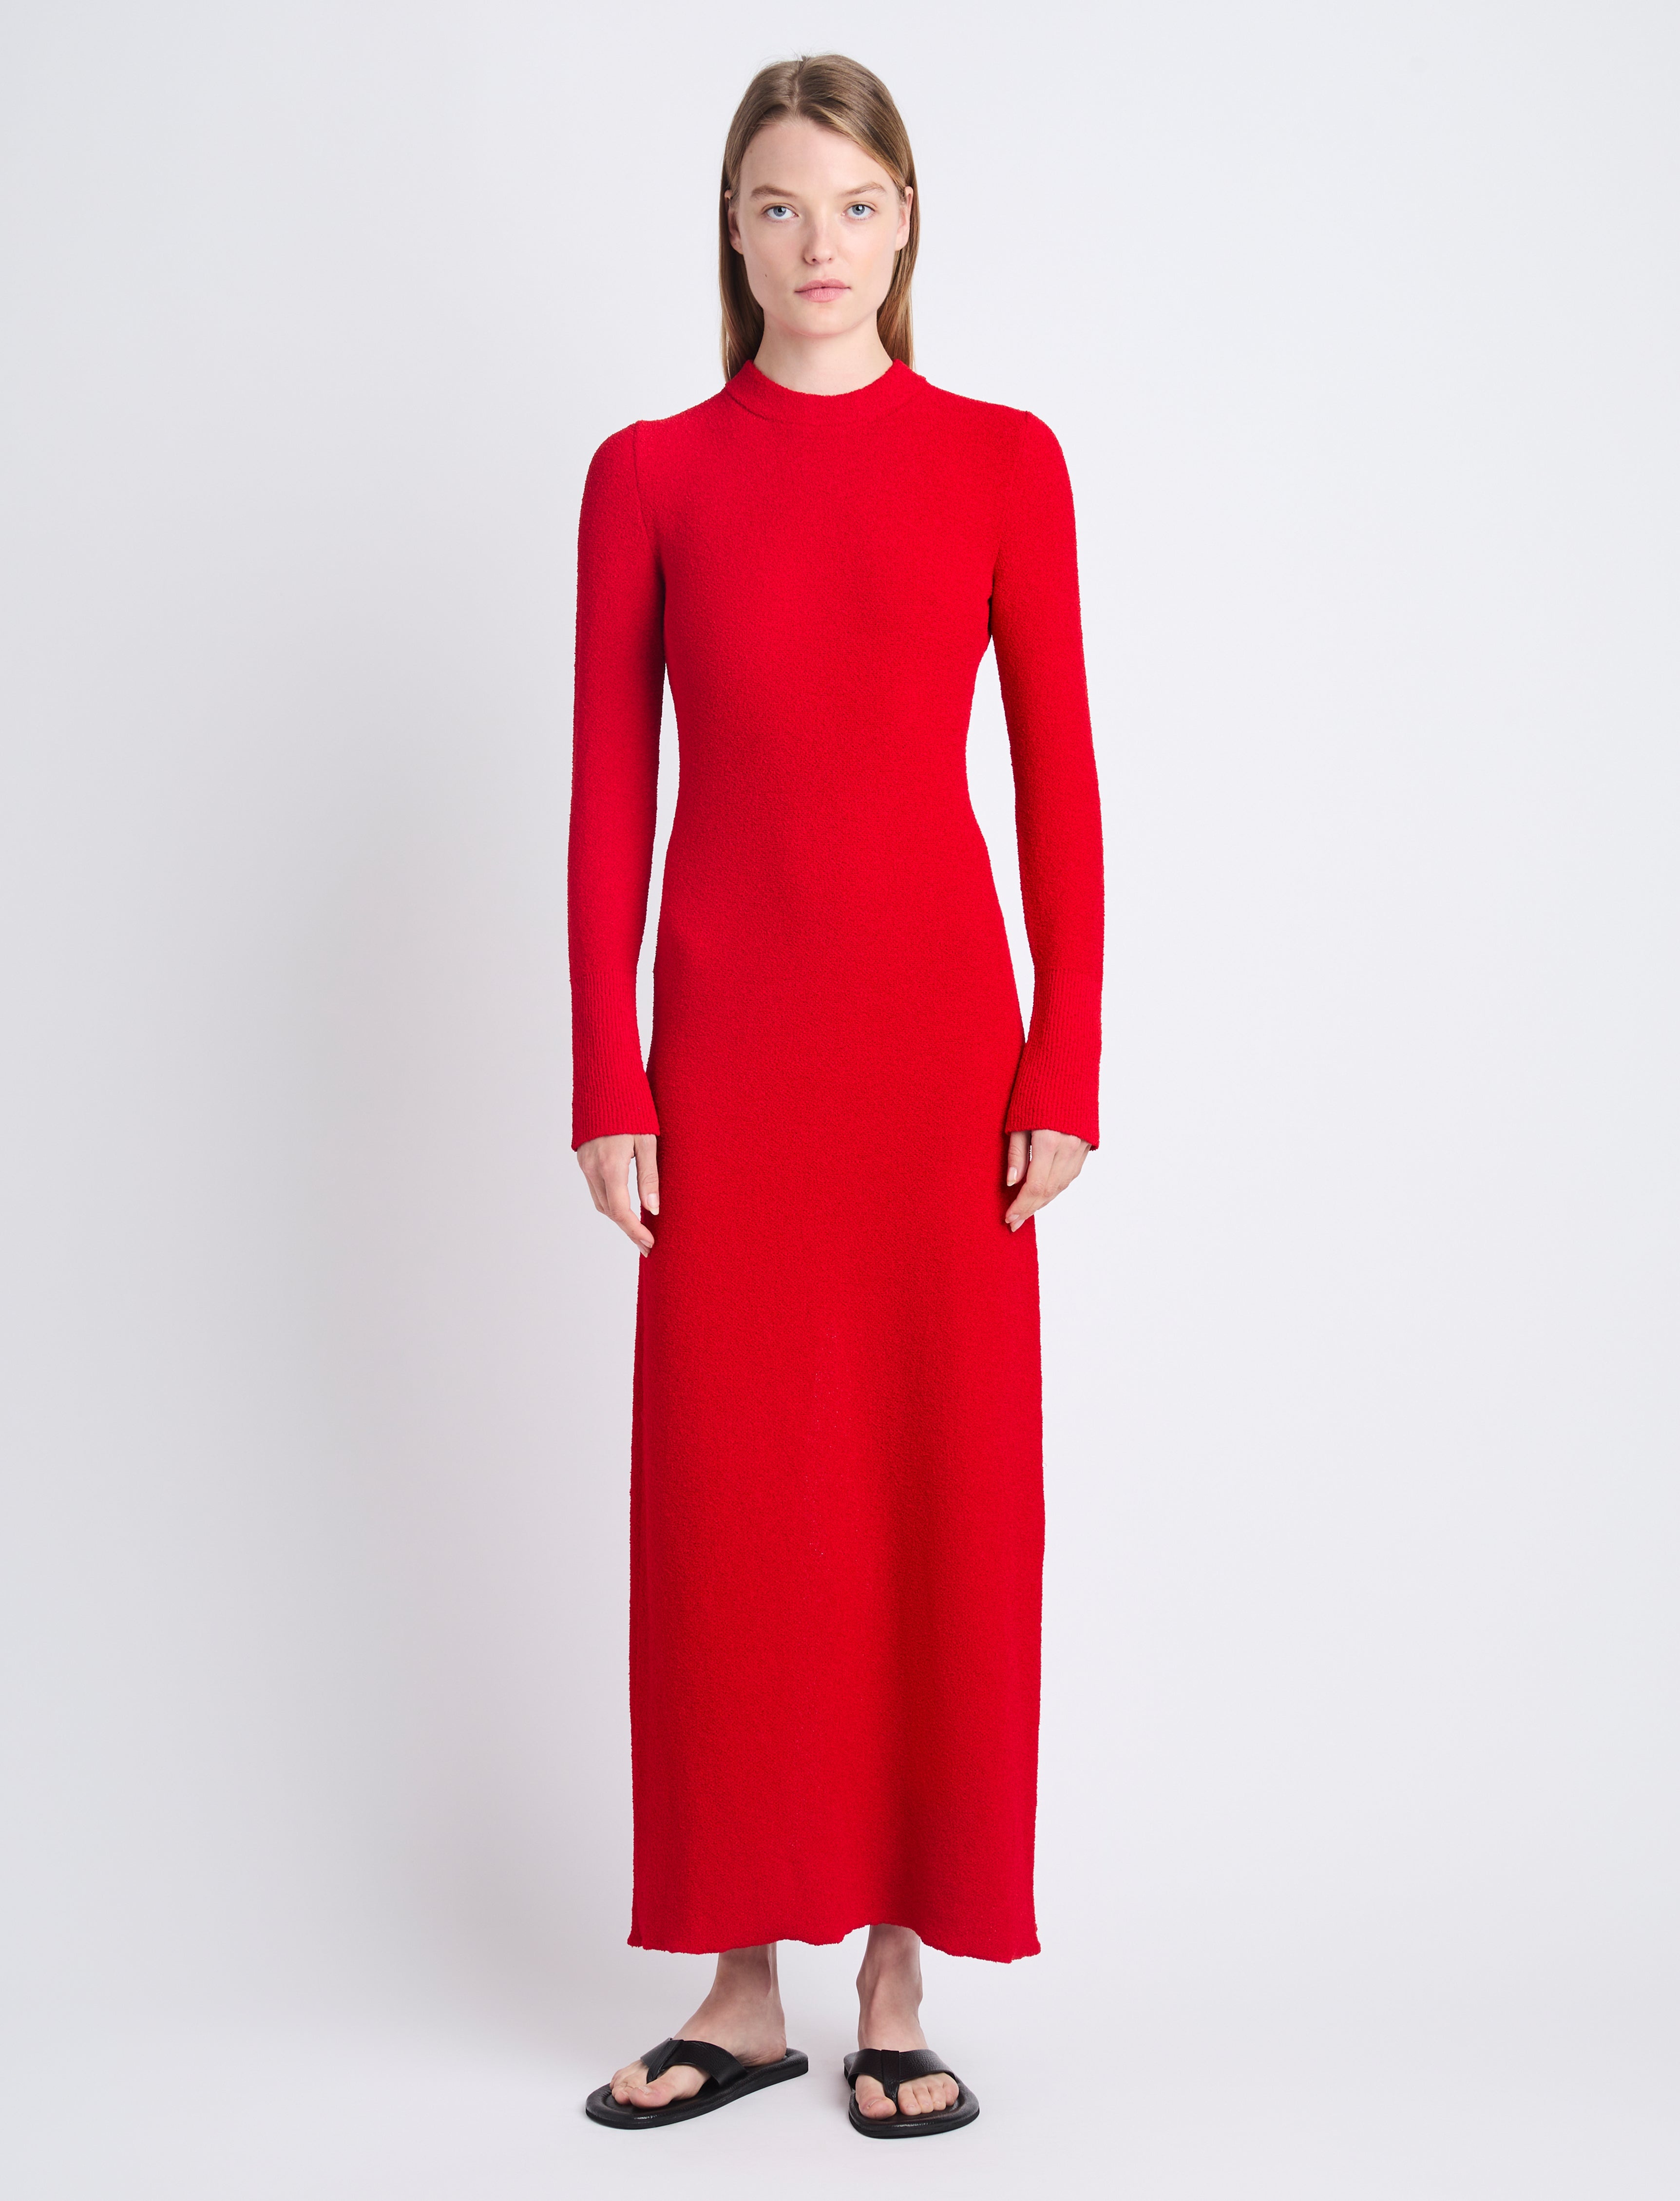 Lara Knit Dress in Viscose Boucle - 3